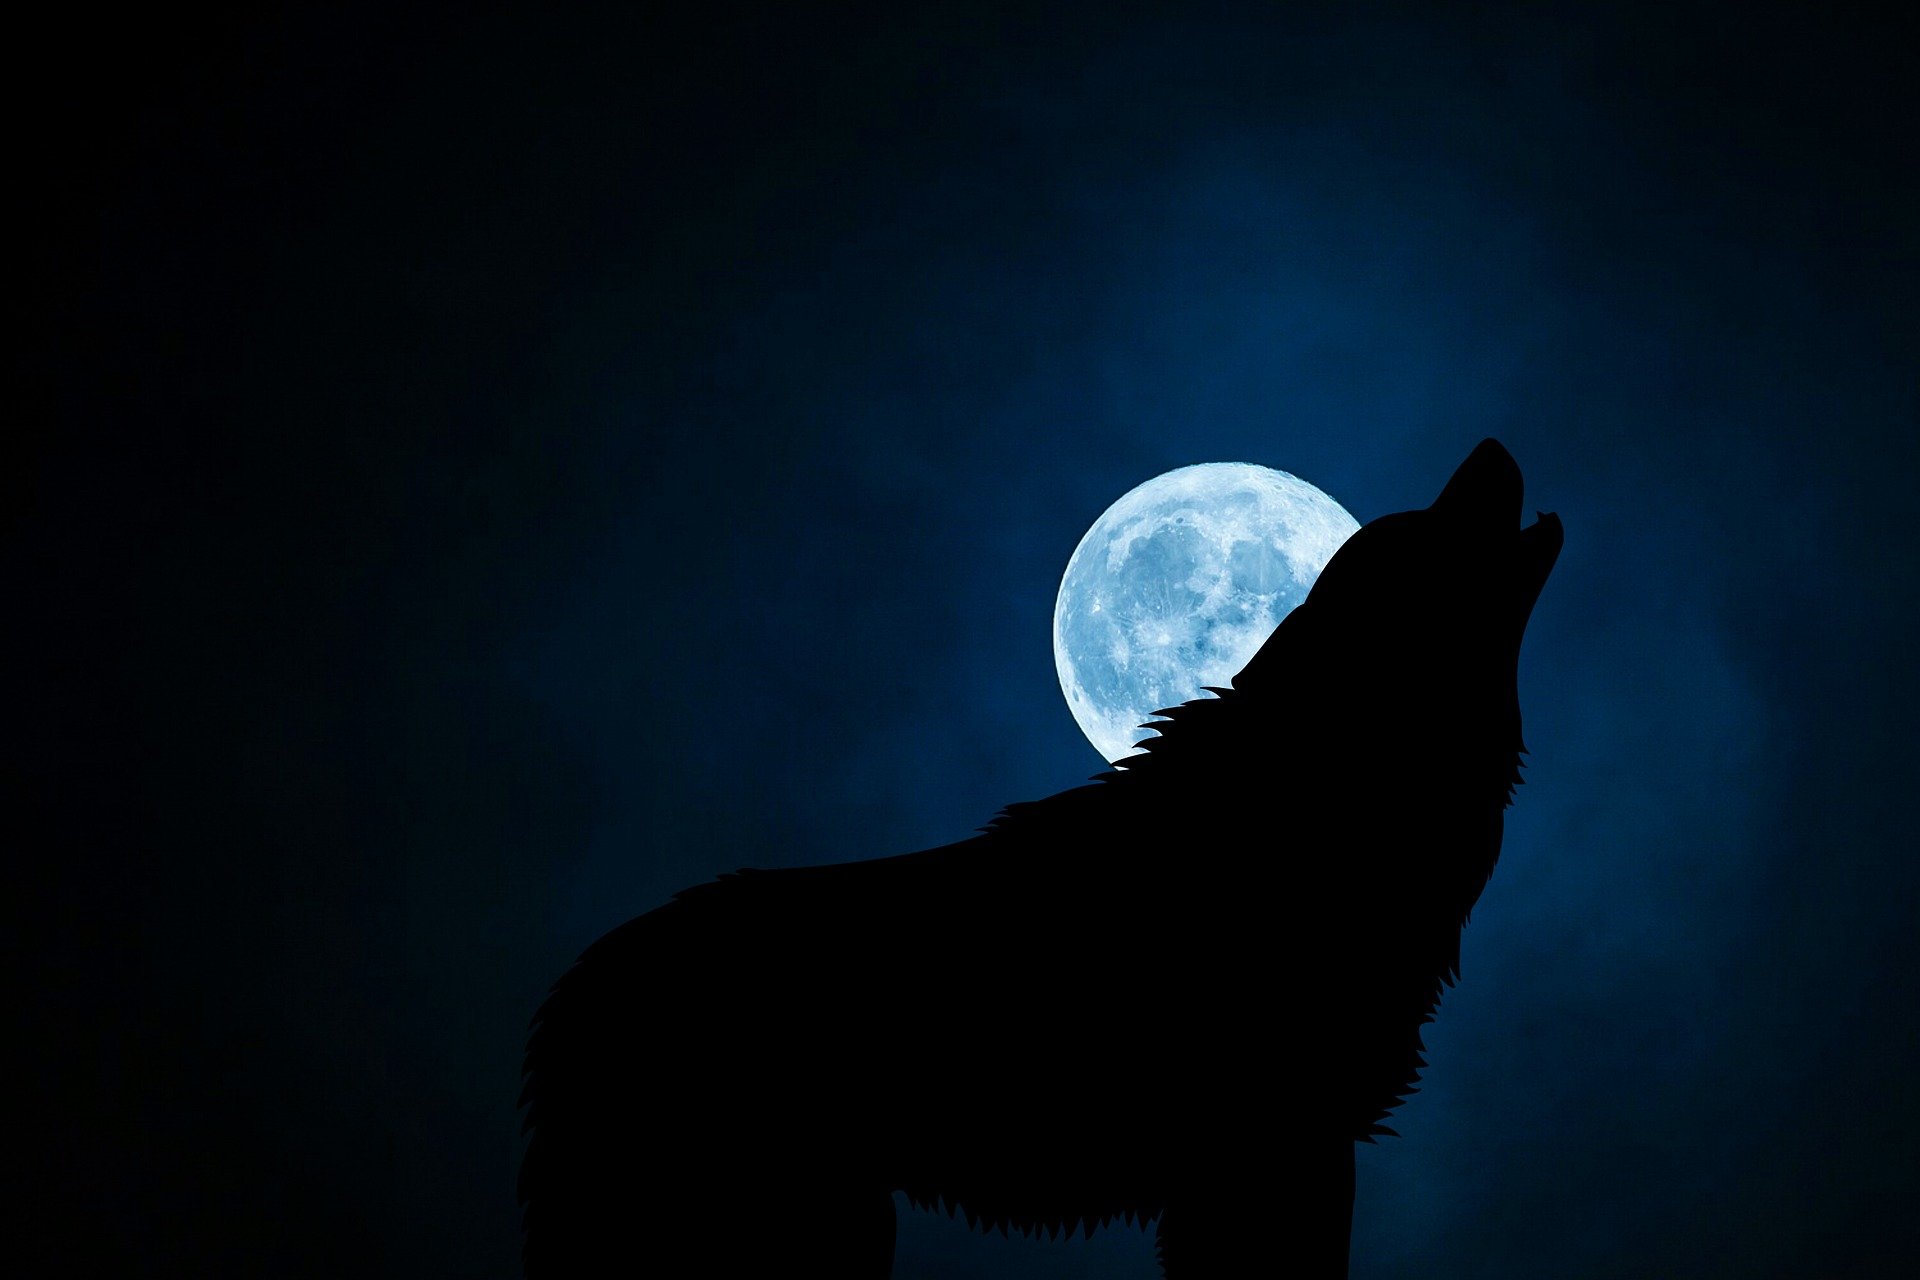 Loup-Garou grandeur nature, le jeu de nuit — LaToileScoute